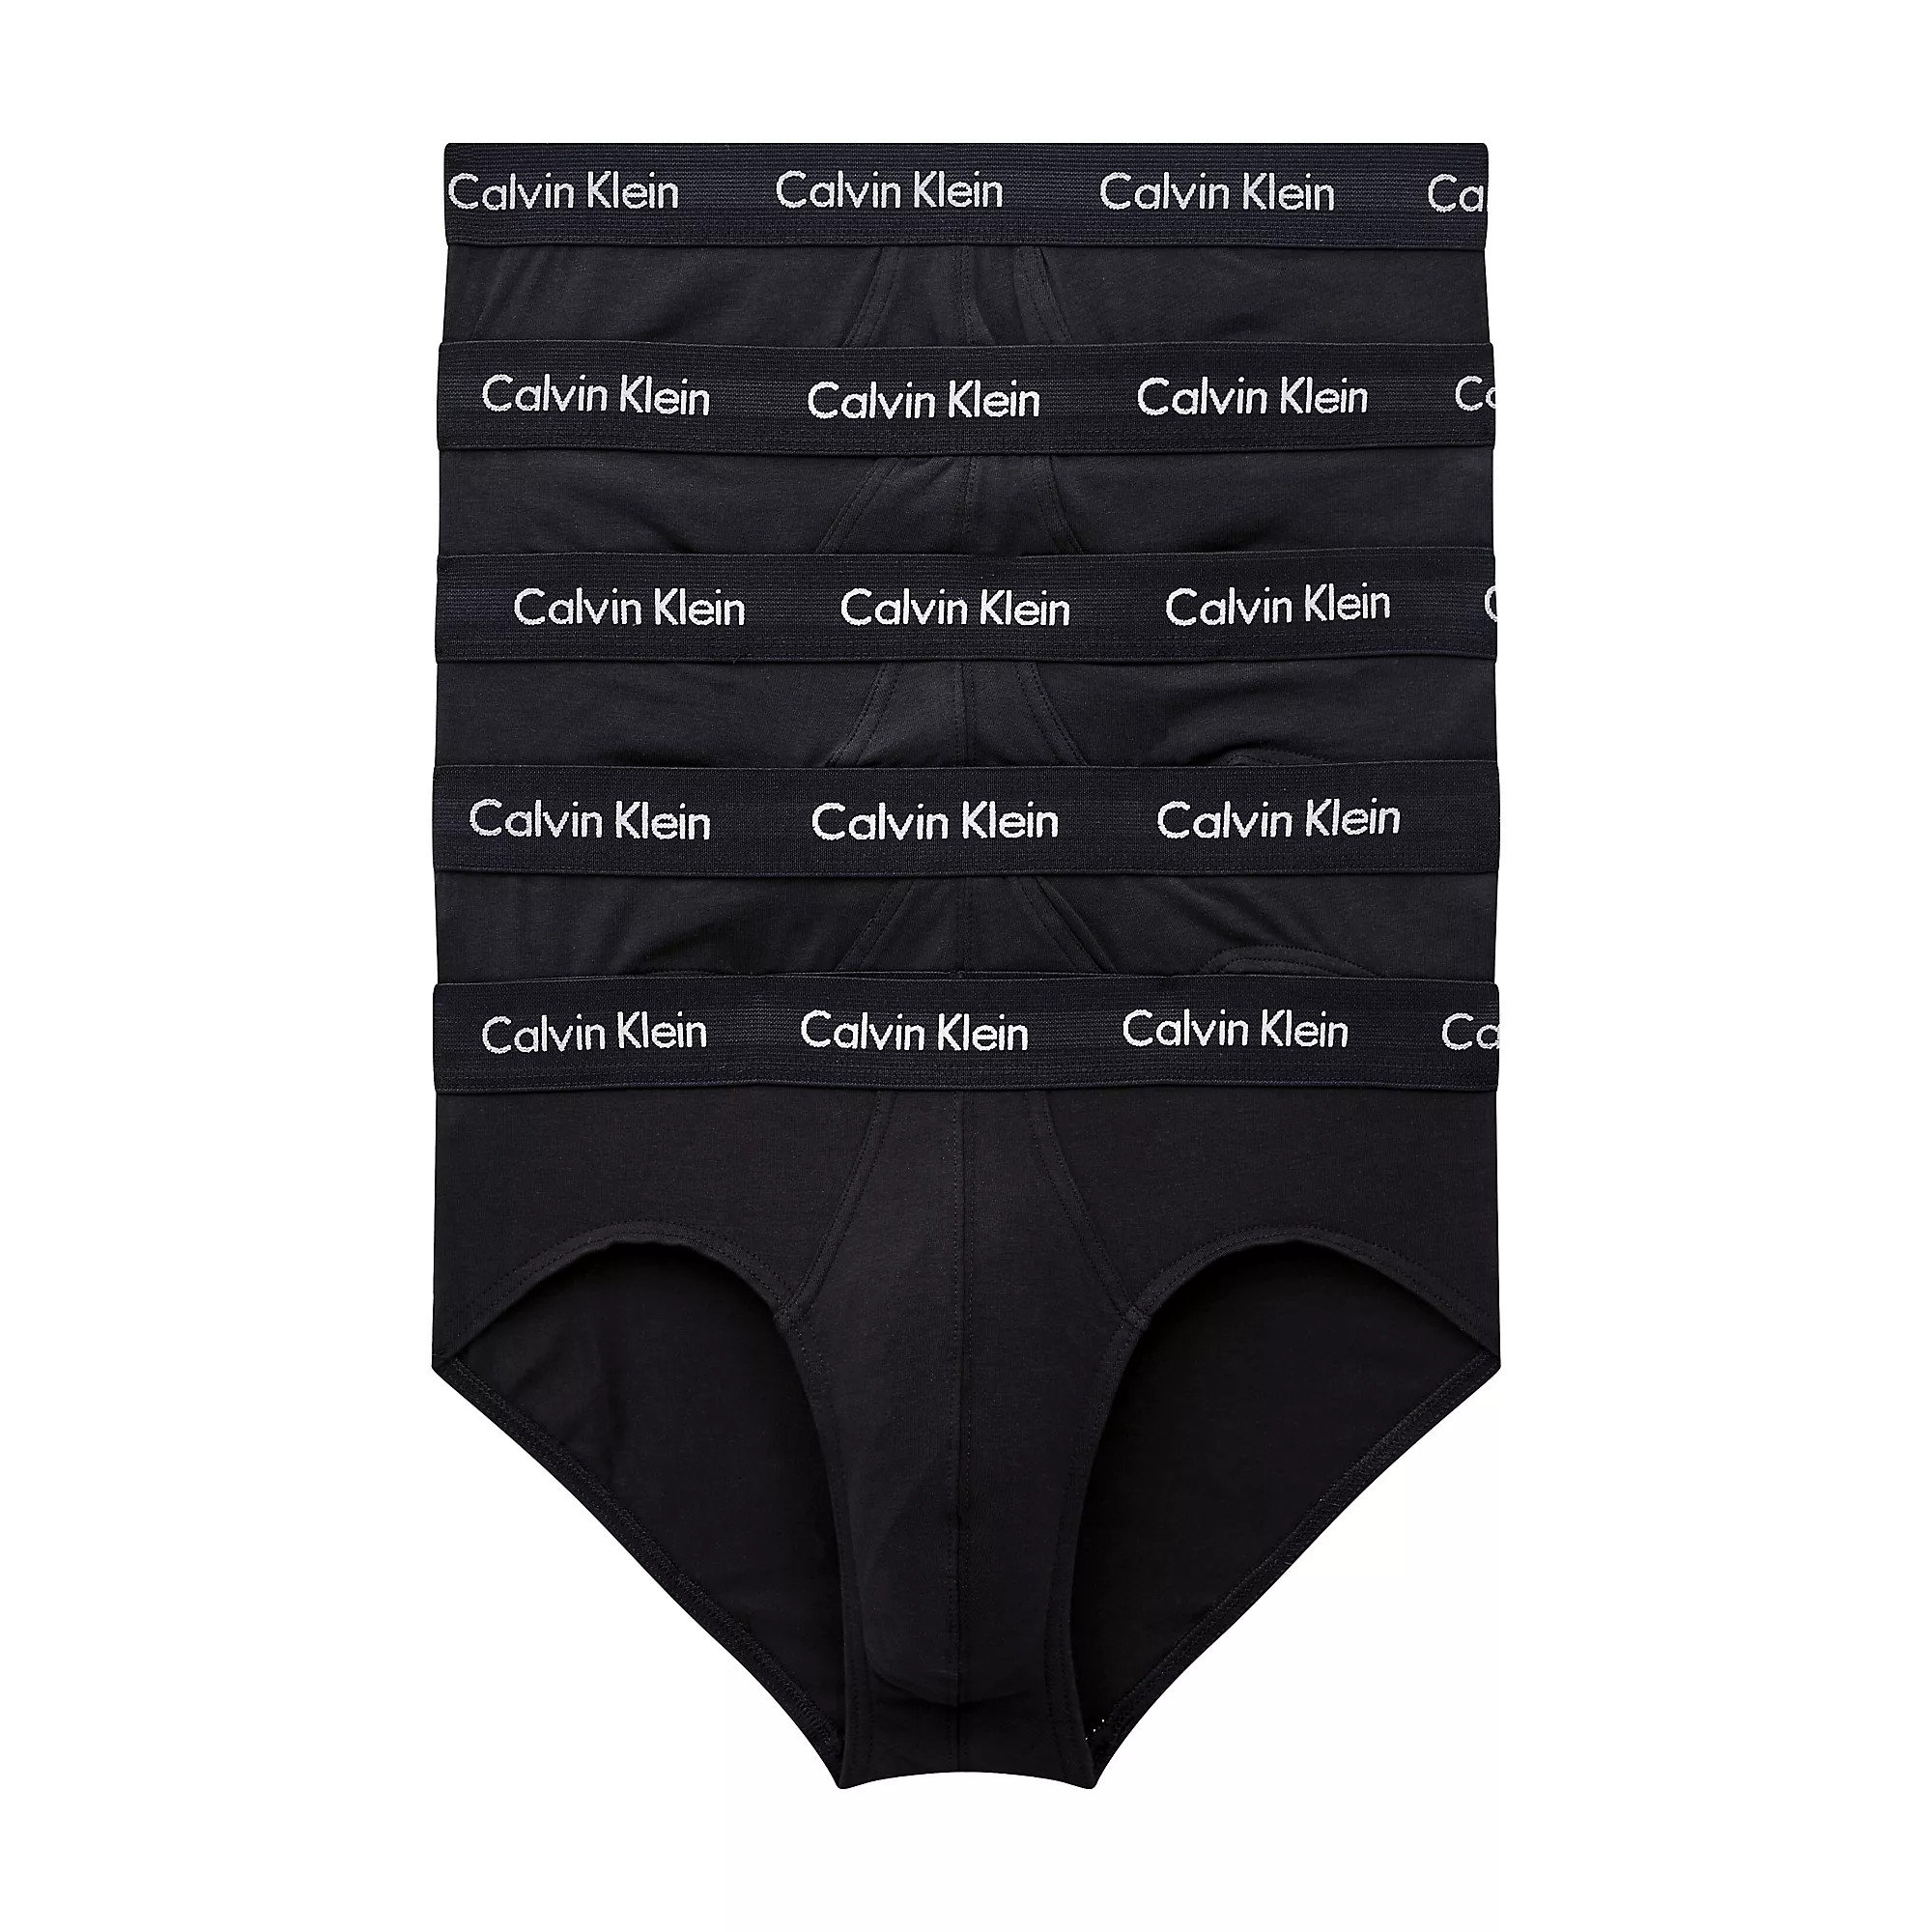 Pánské spodní prádlo HIP BRIEF 5PK 000NB2876AXWB - Calvin Klein XS